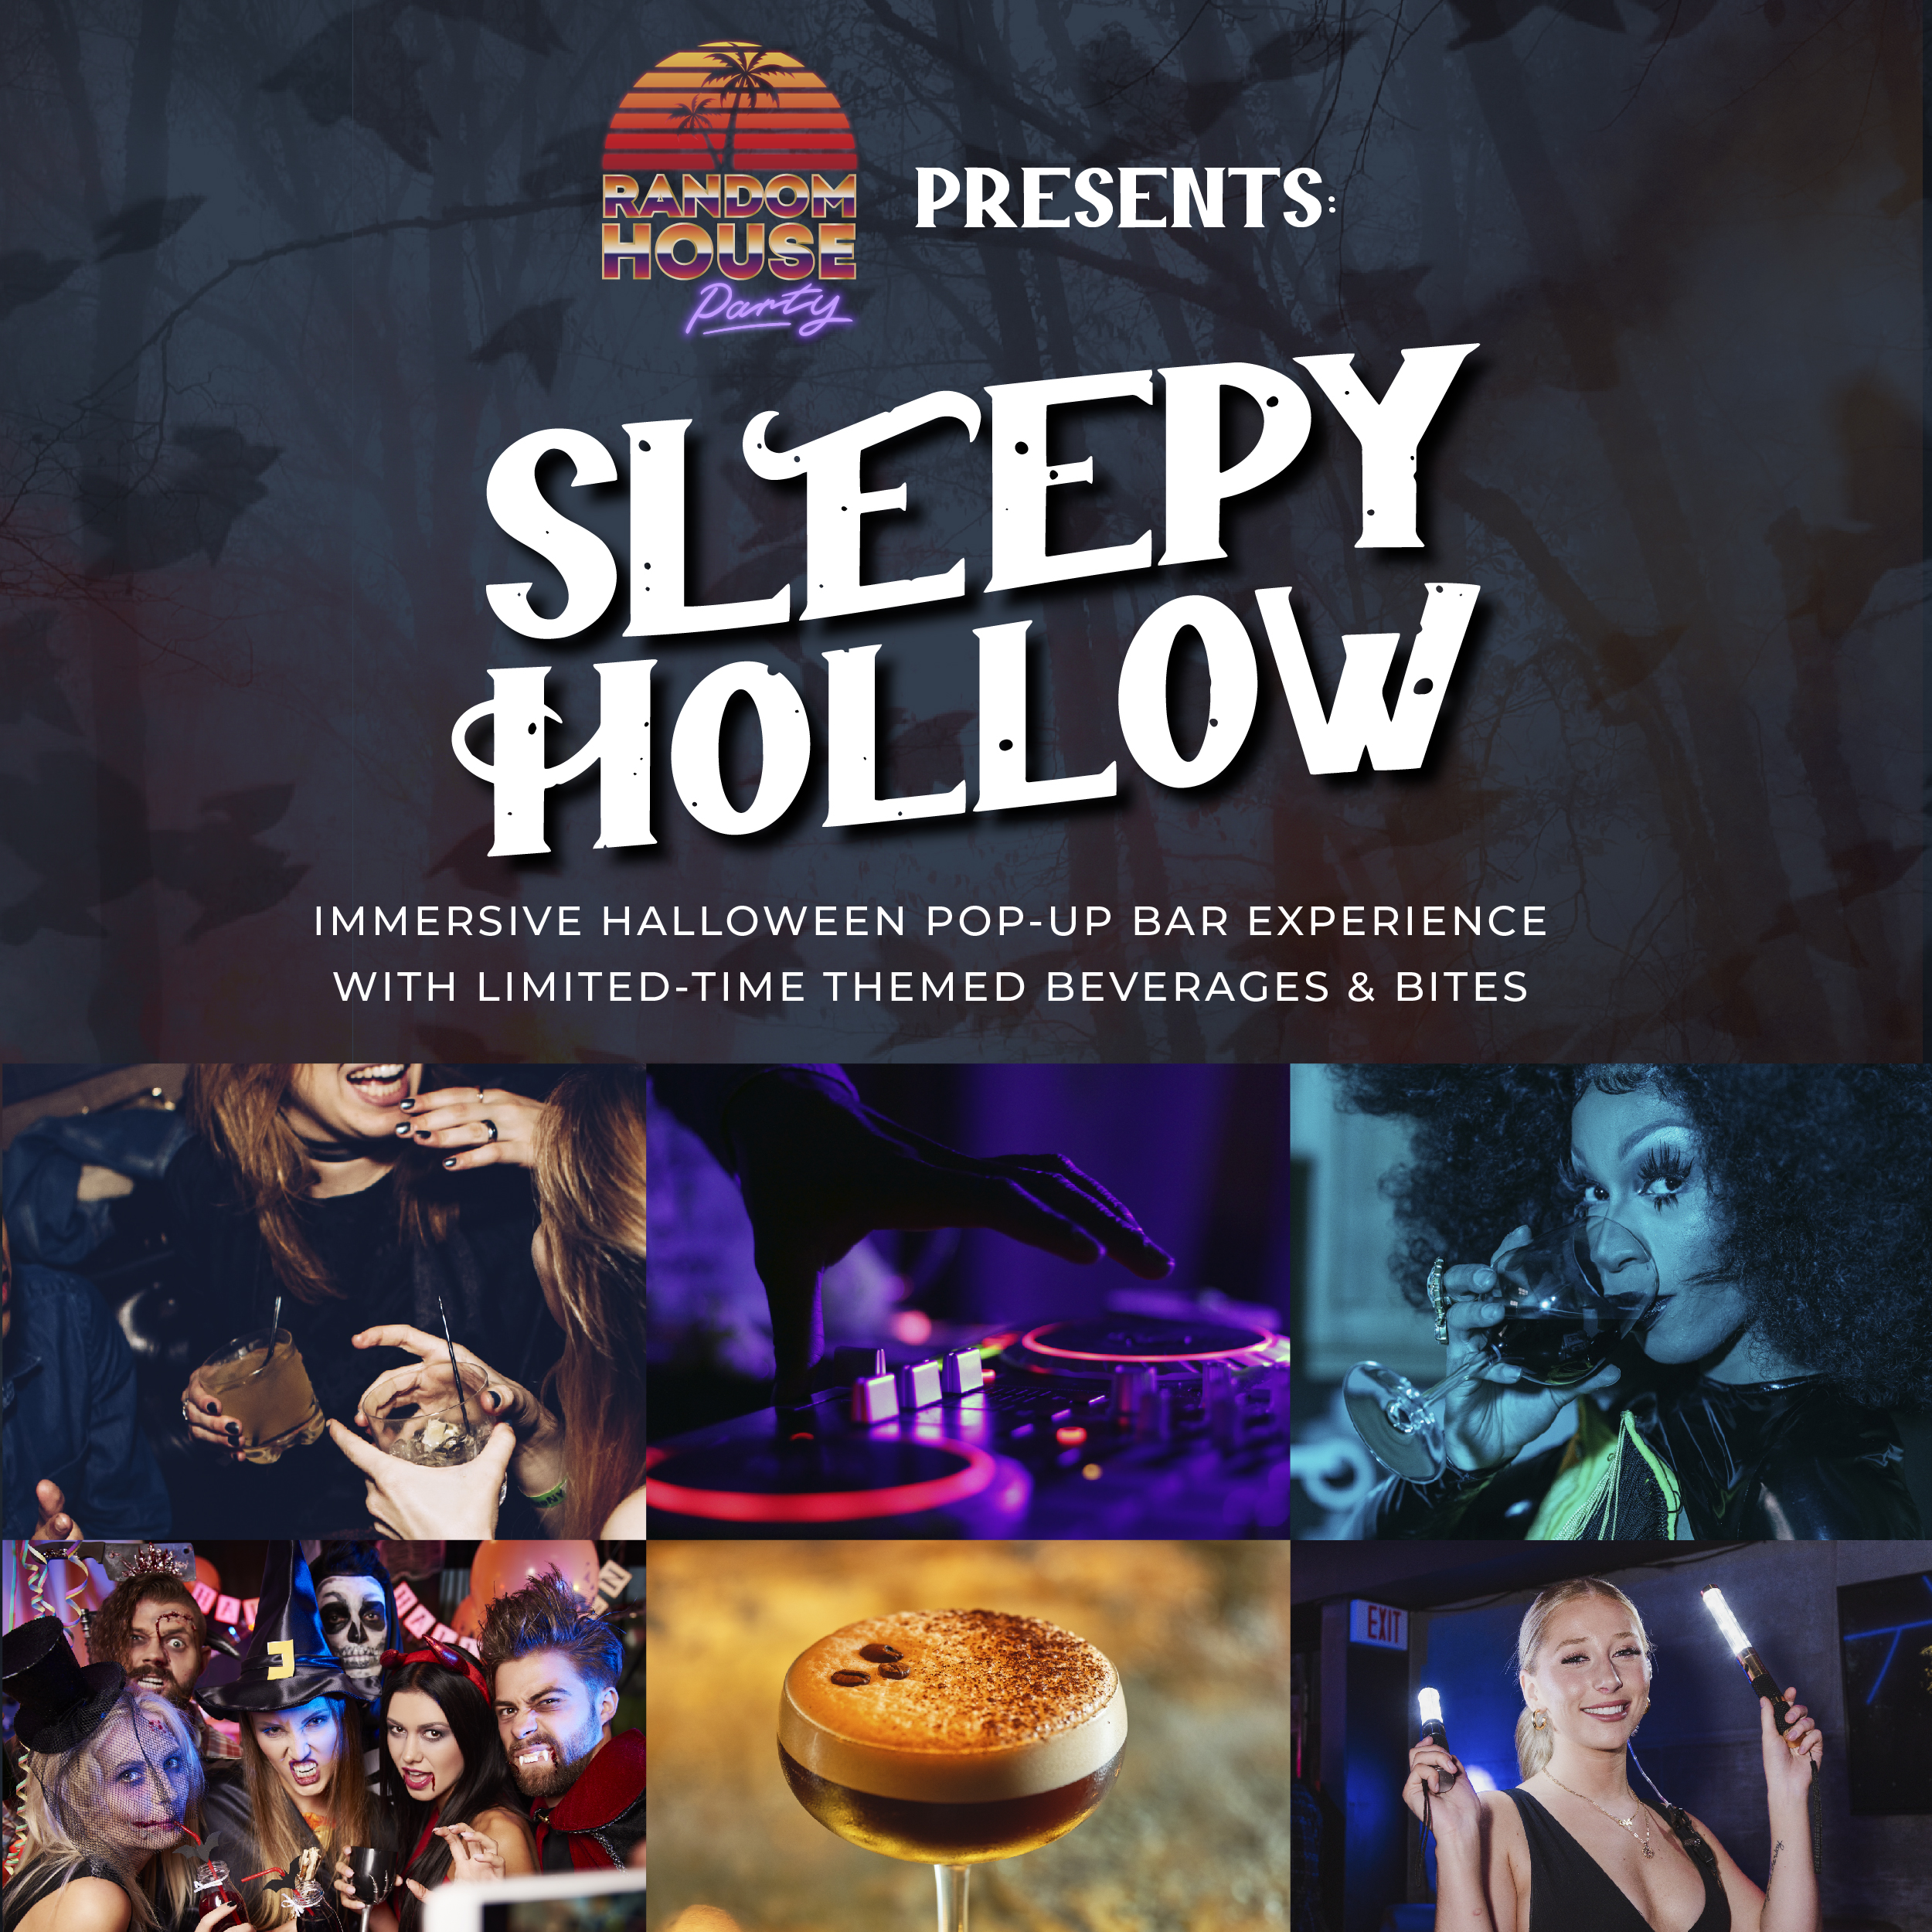 “Sleepy Hollow”, an Immersive Halloween Pop-Up Bar Opens in Downtown St. Pete This Weekend